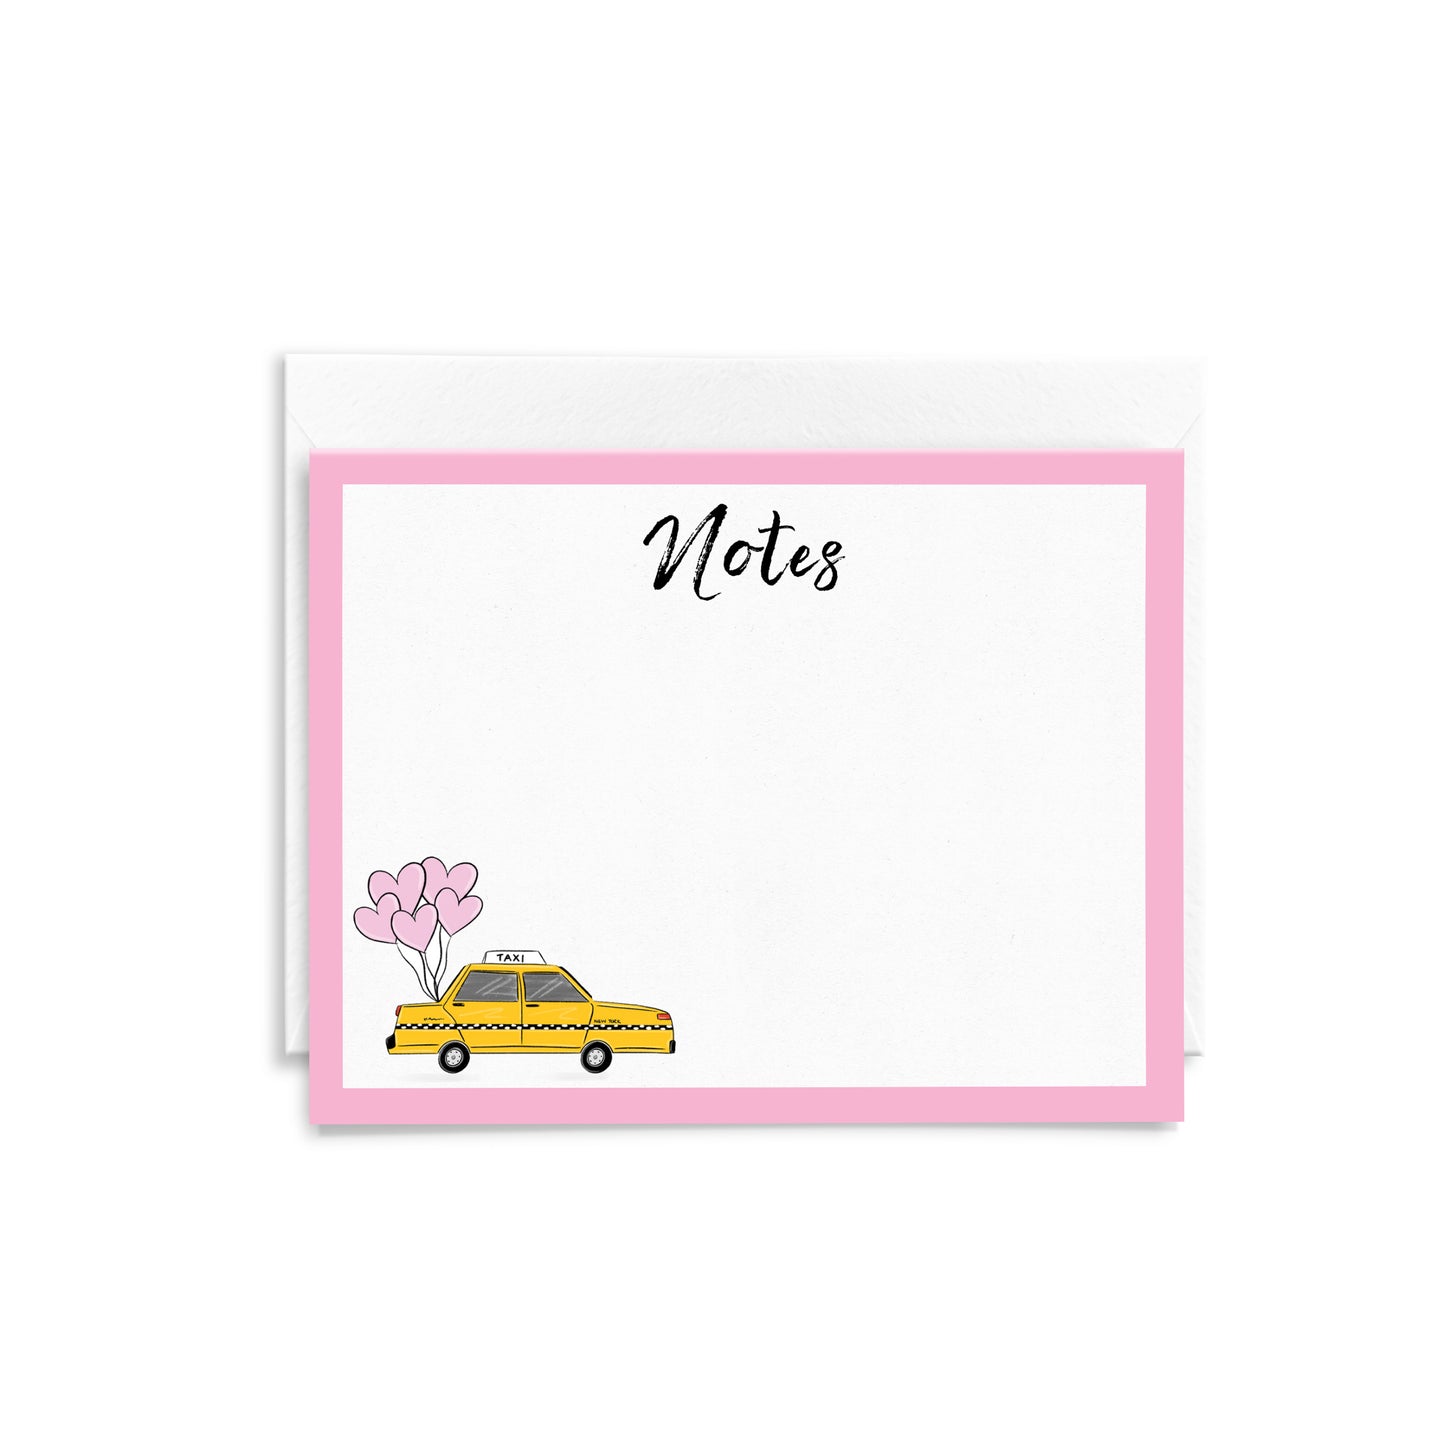 NYC Taxi flat notecards